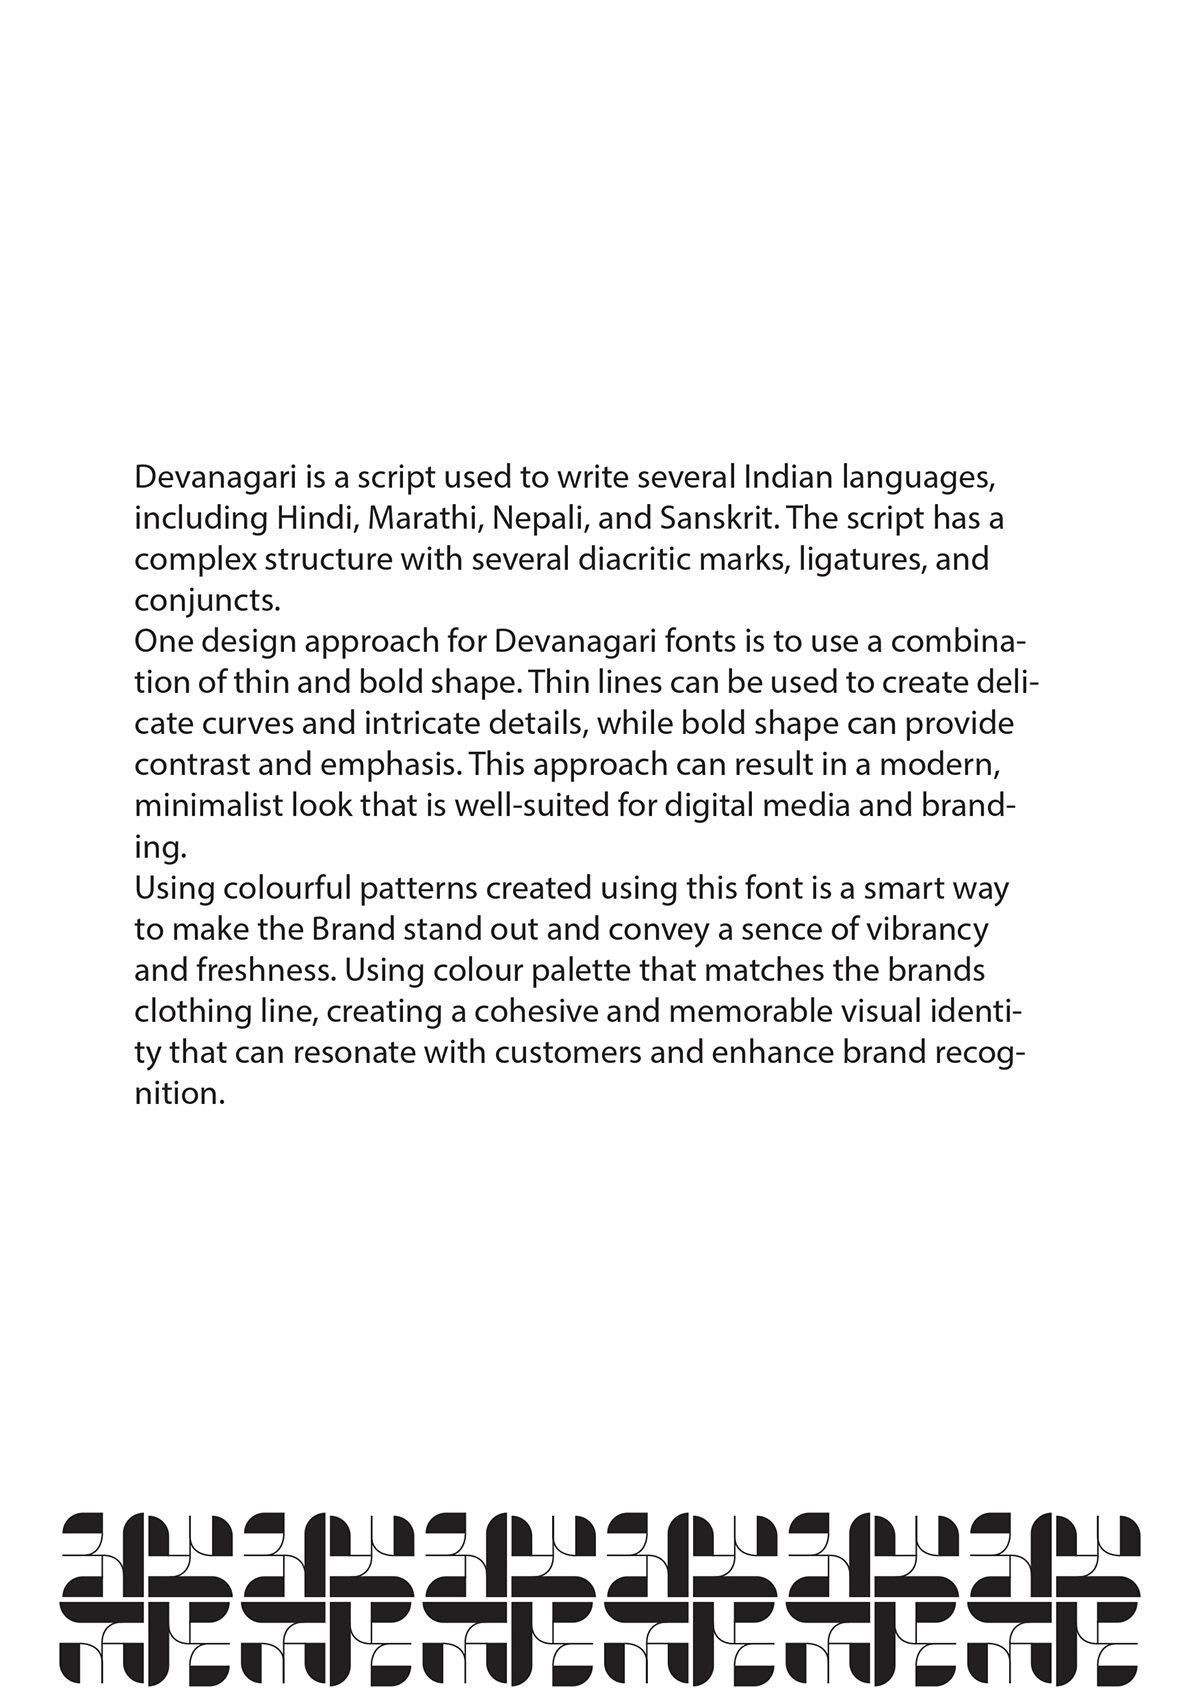 devnagri font font design Script Font Typeface brand identity Devnagri Script